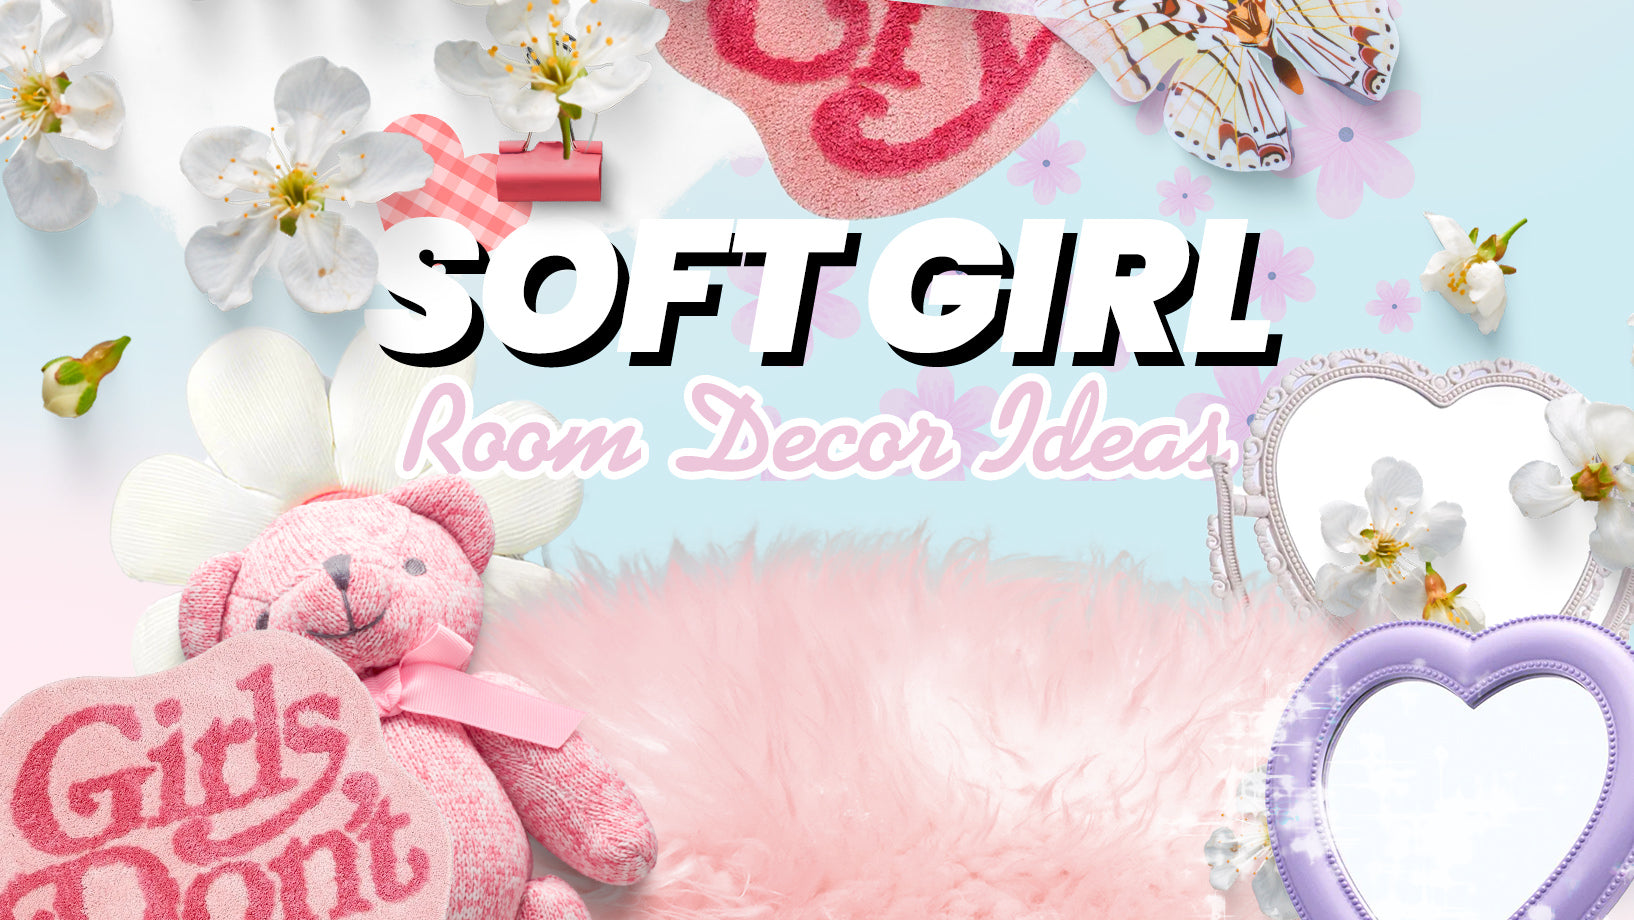 Soft Girl Aesthetic Room Decor Ideas - How to make a Soft Girl room?